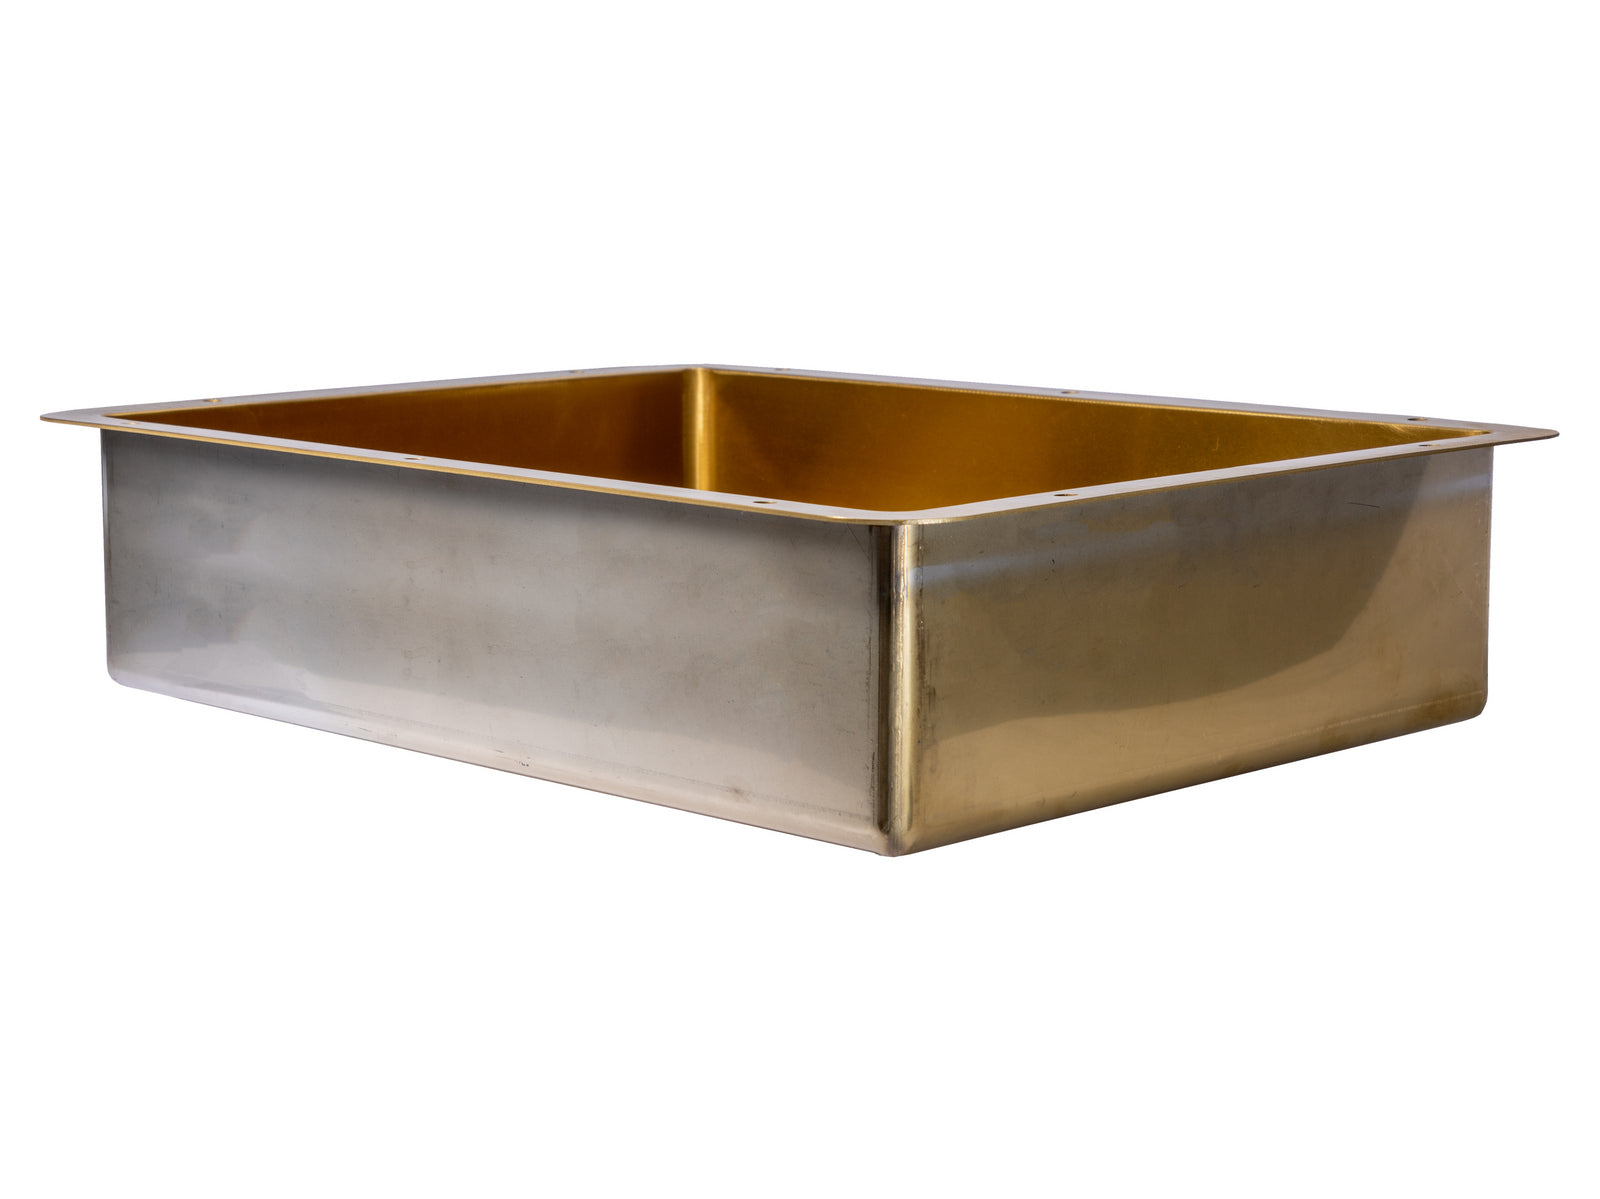 Rectangular 20" x 16" Stainless Steel Undermount Bathroom Sink with Drain in Gold